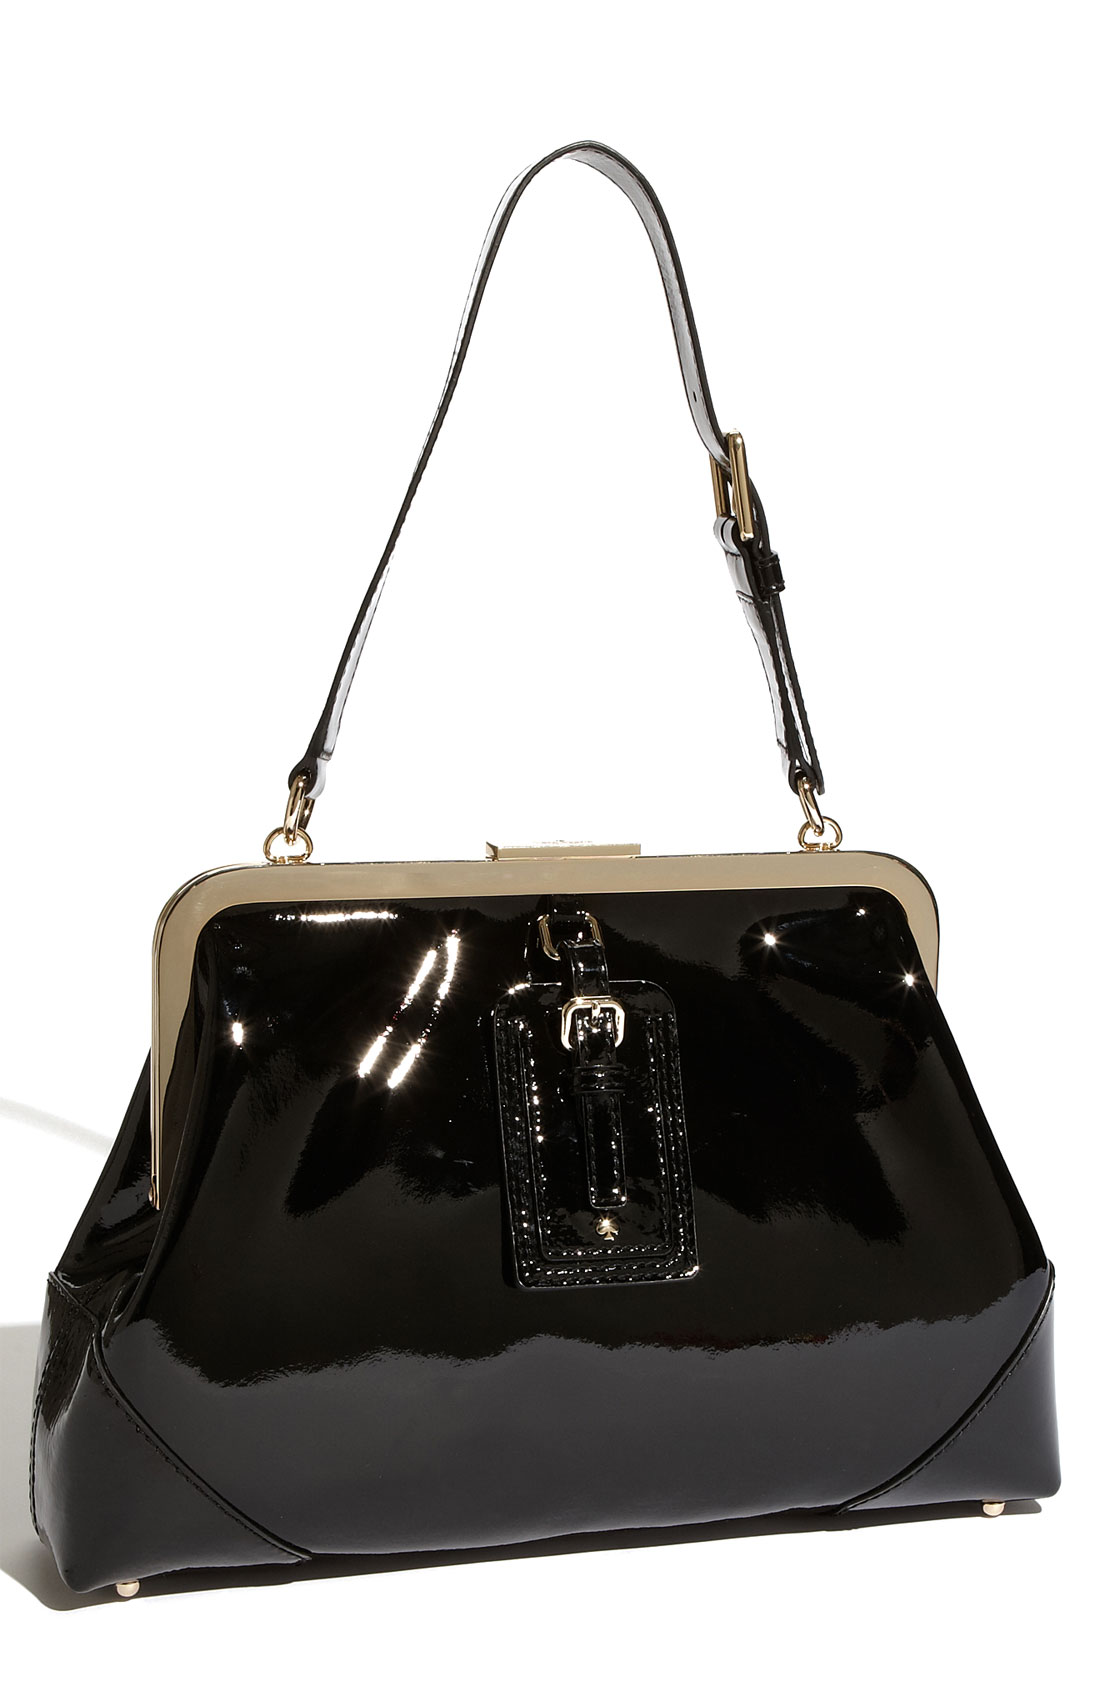 Kate Spade Black Patent Leather Handbag | SEMA Data Co-op